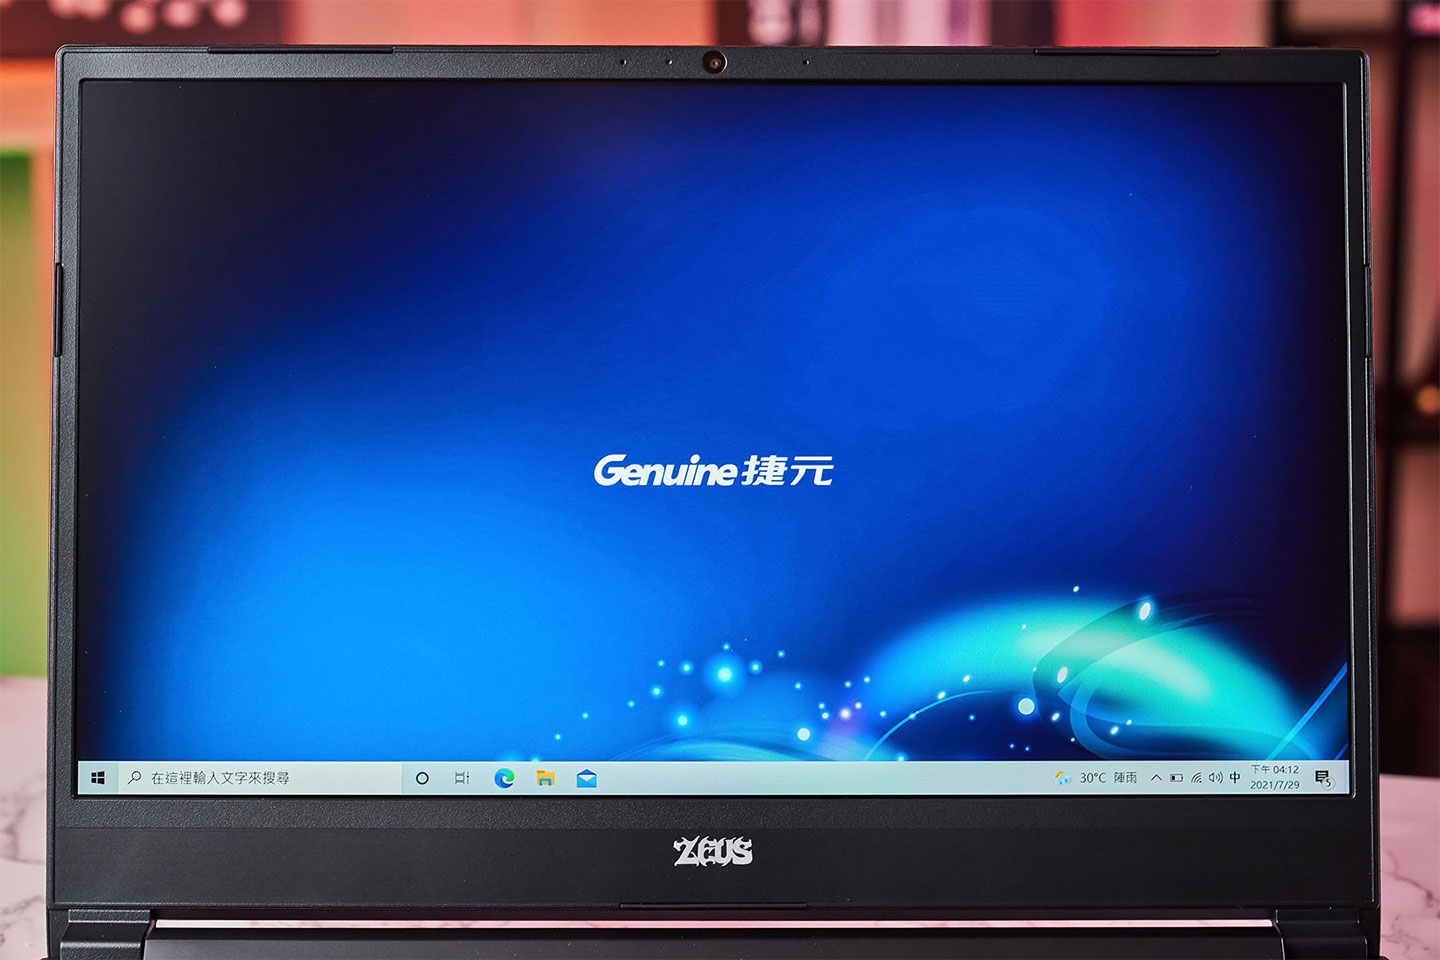 Genuine 捷元 ZEUS 15H 的螢幕採用 Full HD 解析度的 IPS 等級面板，並支援 144 Hz 更新率的電競級面板，在運行遊戲時能有更為流暢的視覺效果。